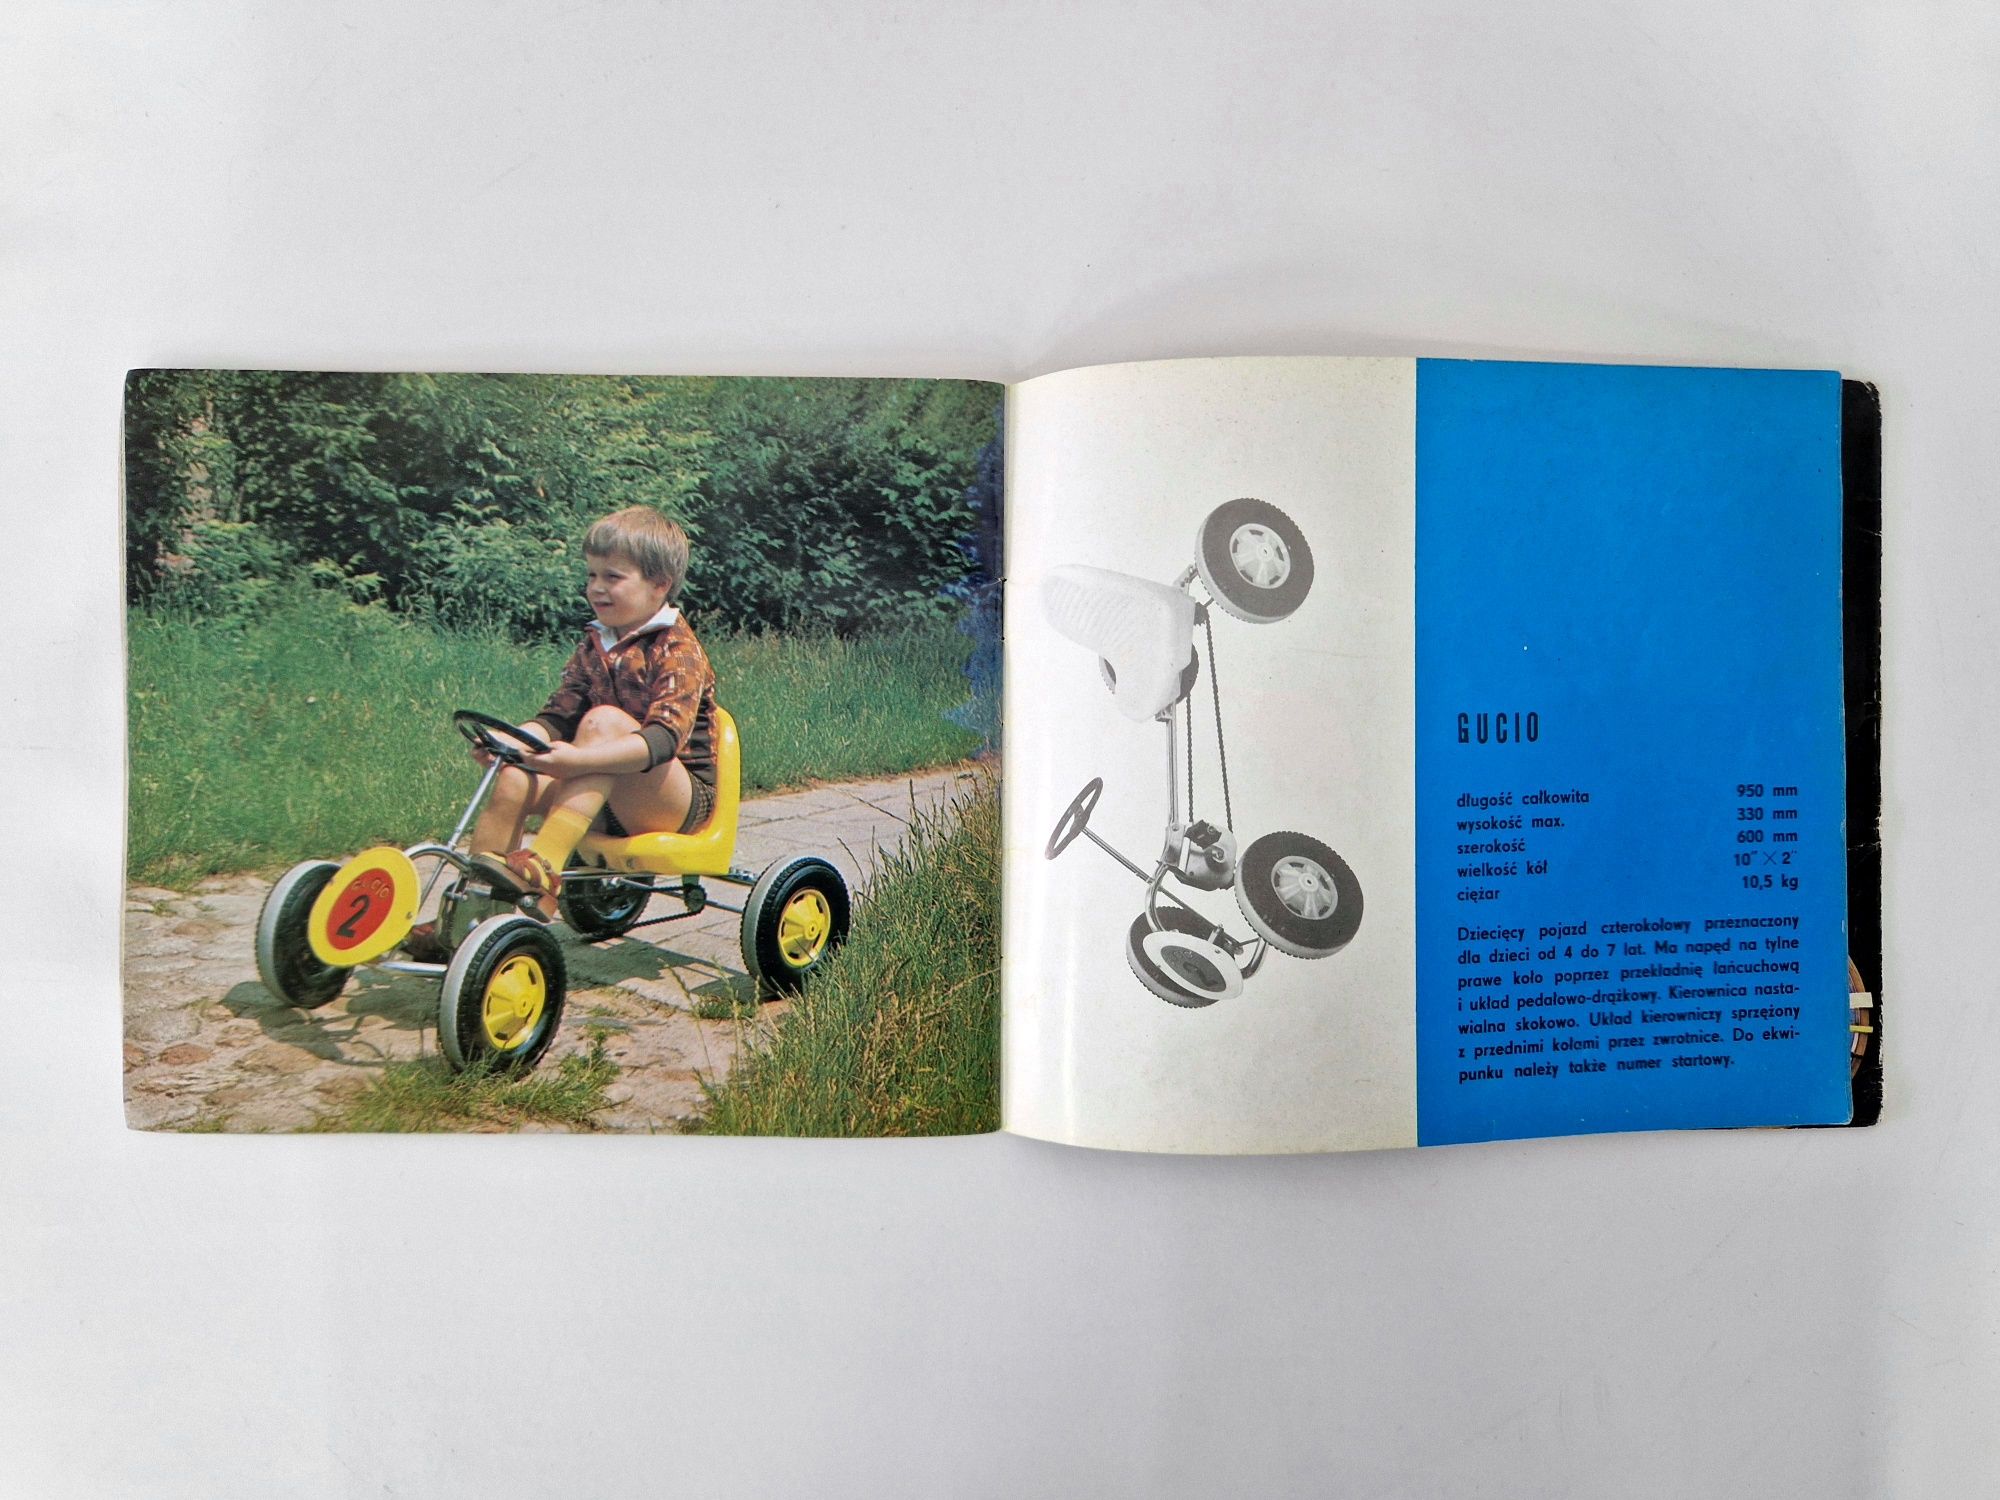 Predom Romet książka katalog rowerów 1978 prospekt folder